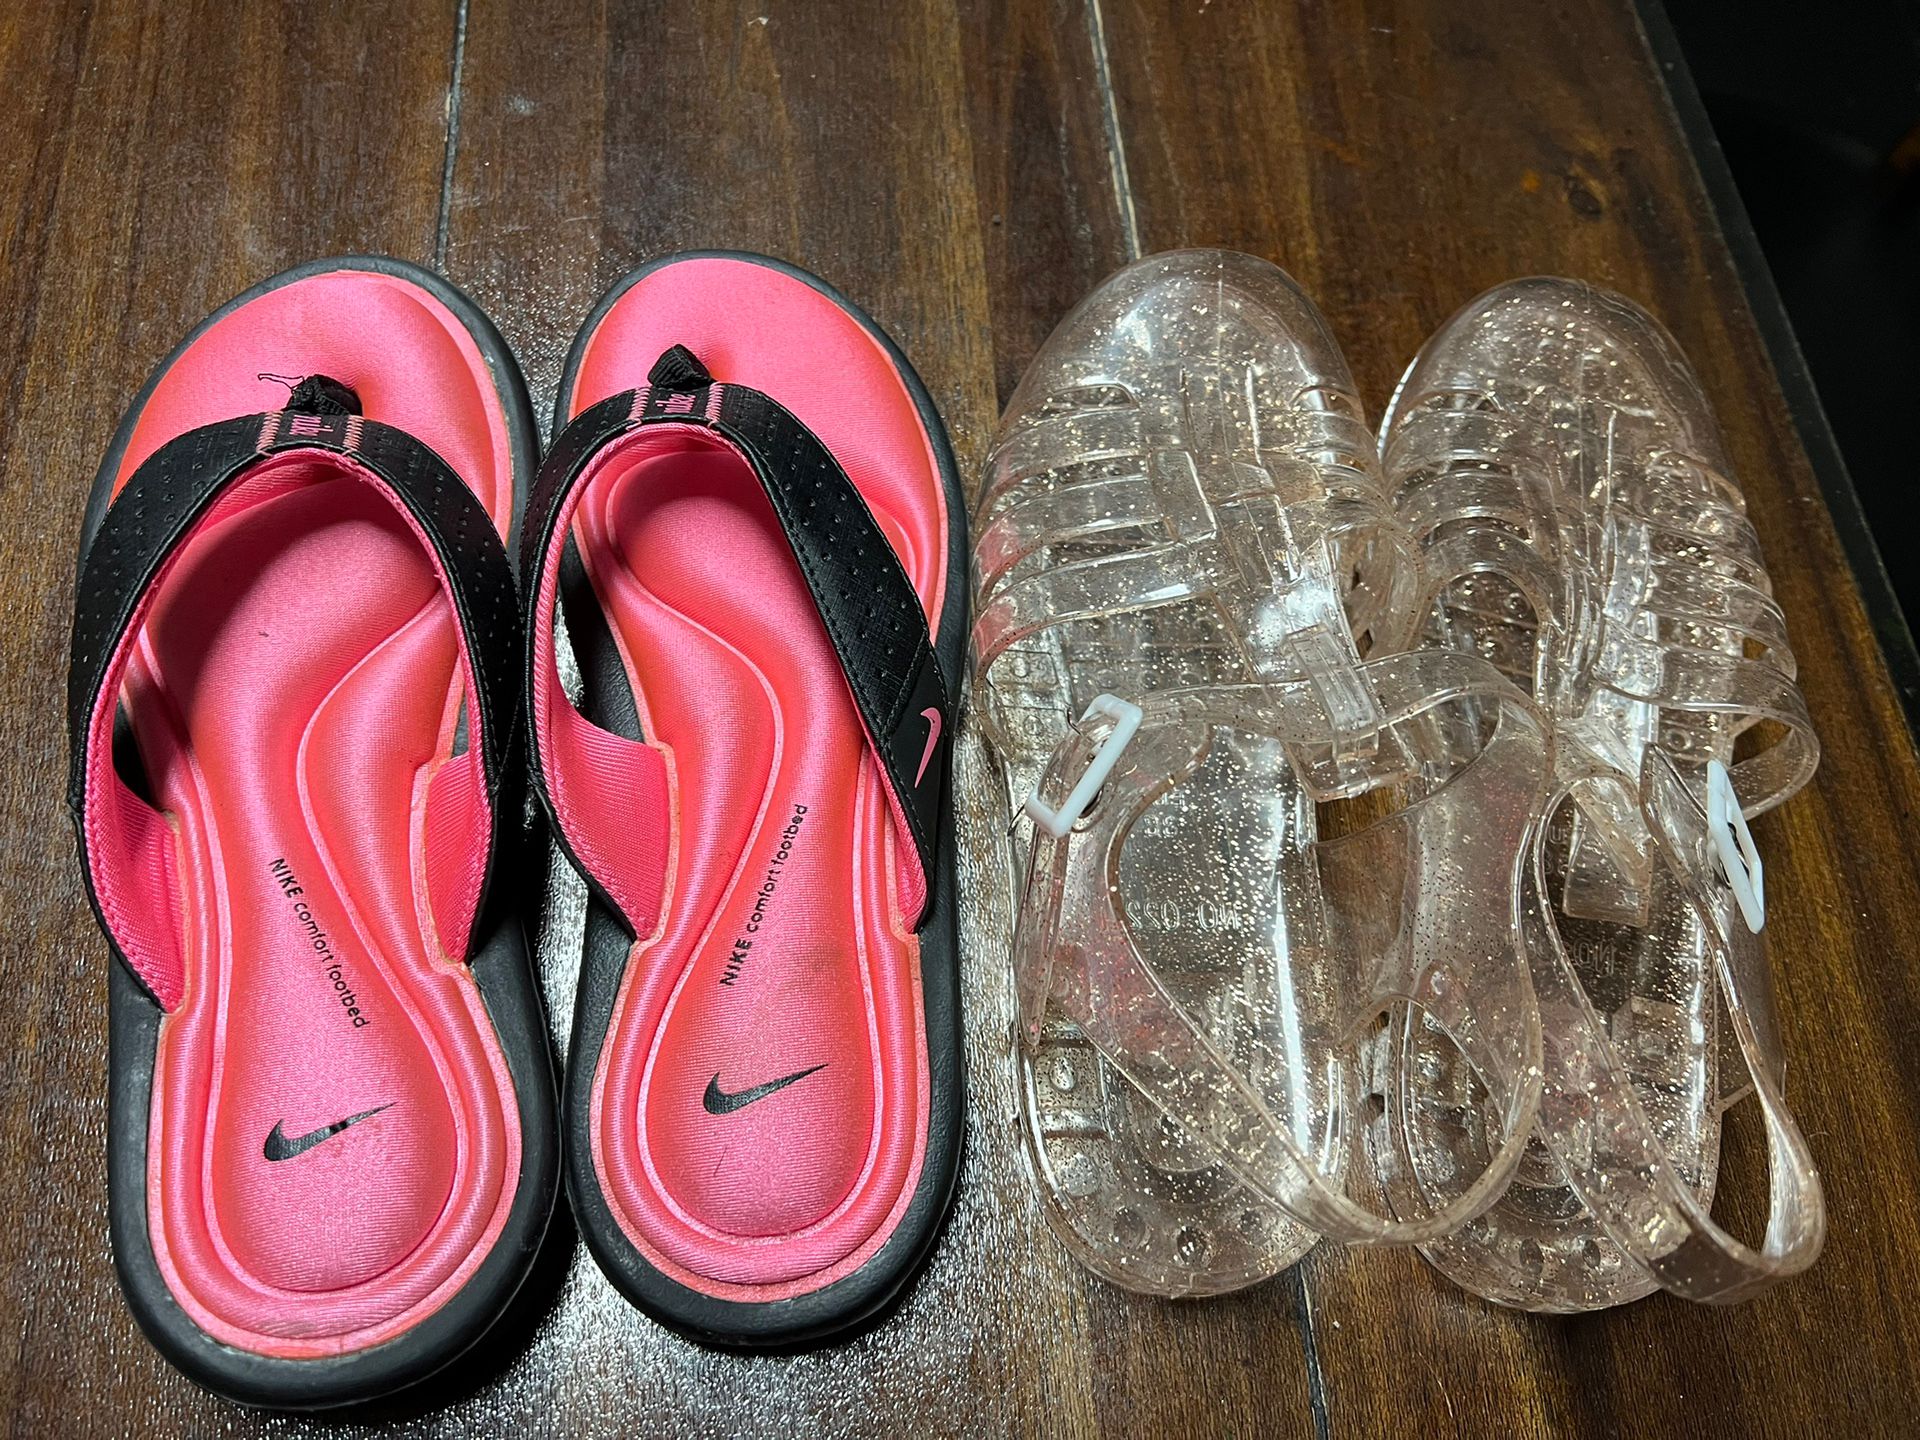 Nike Slipper And Transparent Sandal